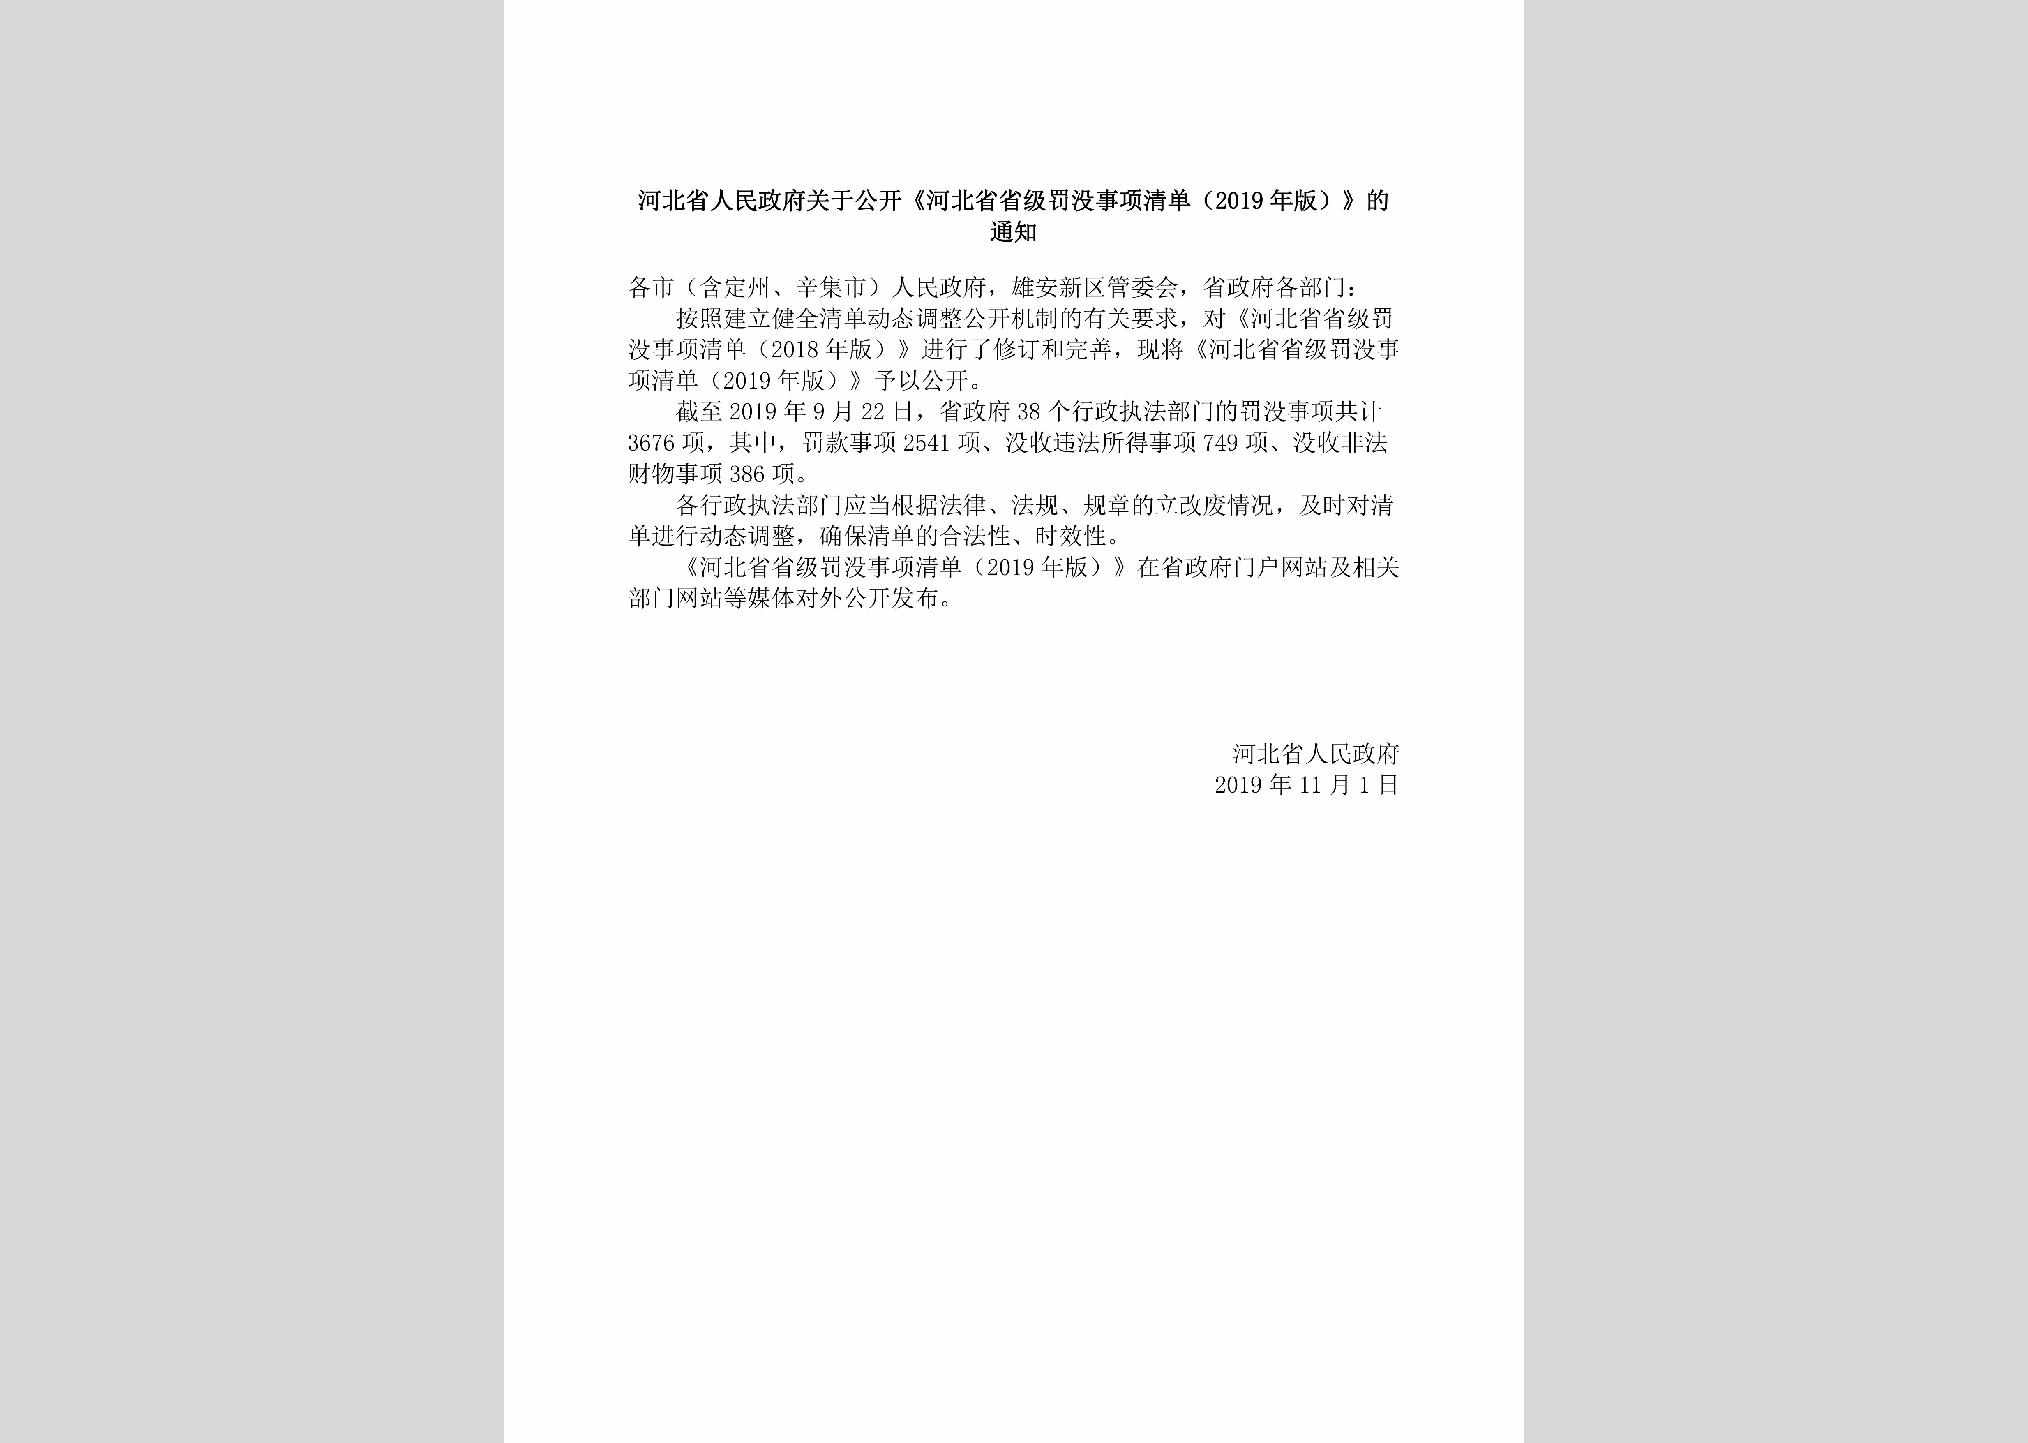 HB-SJFMSXQD-2019：河北省人民政府关于公开《河北省省级罚没事项清单（2019年版）》的通知